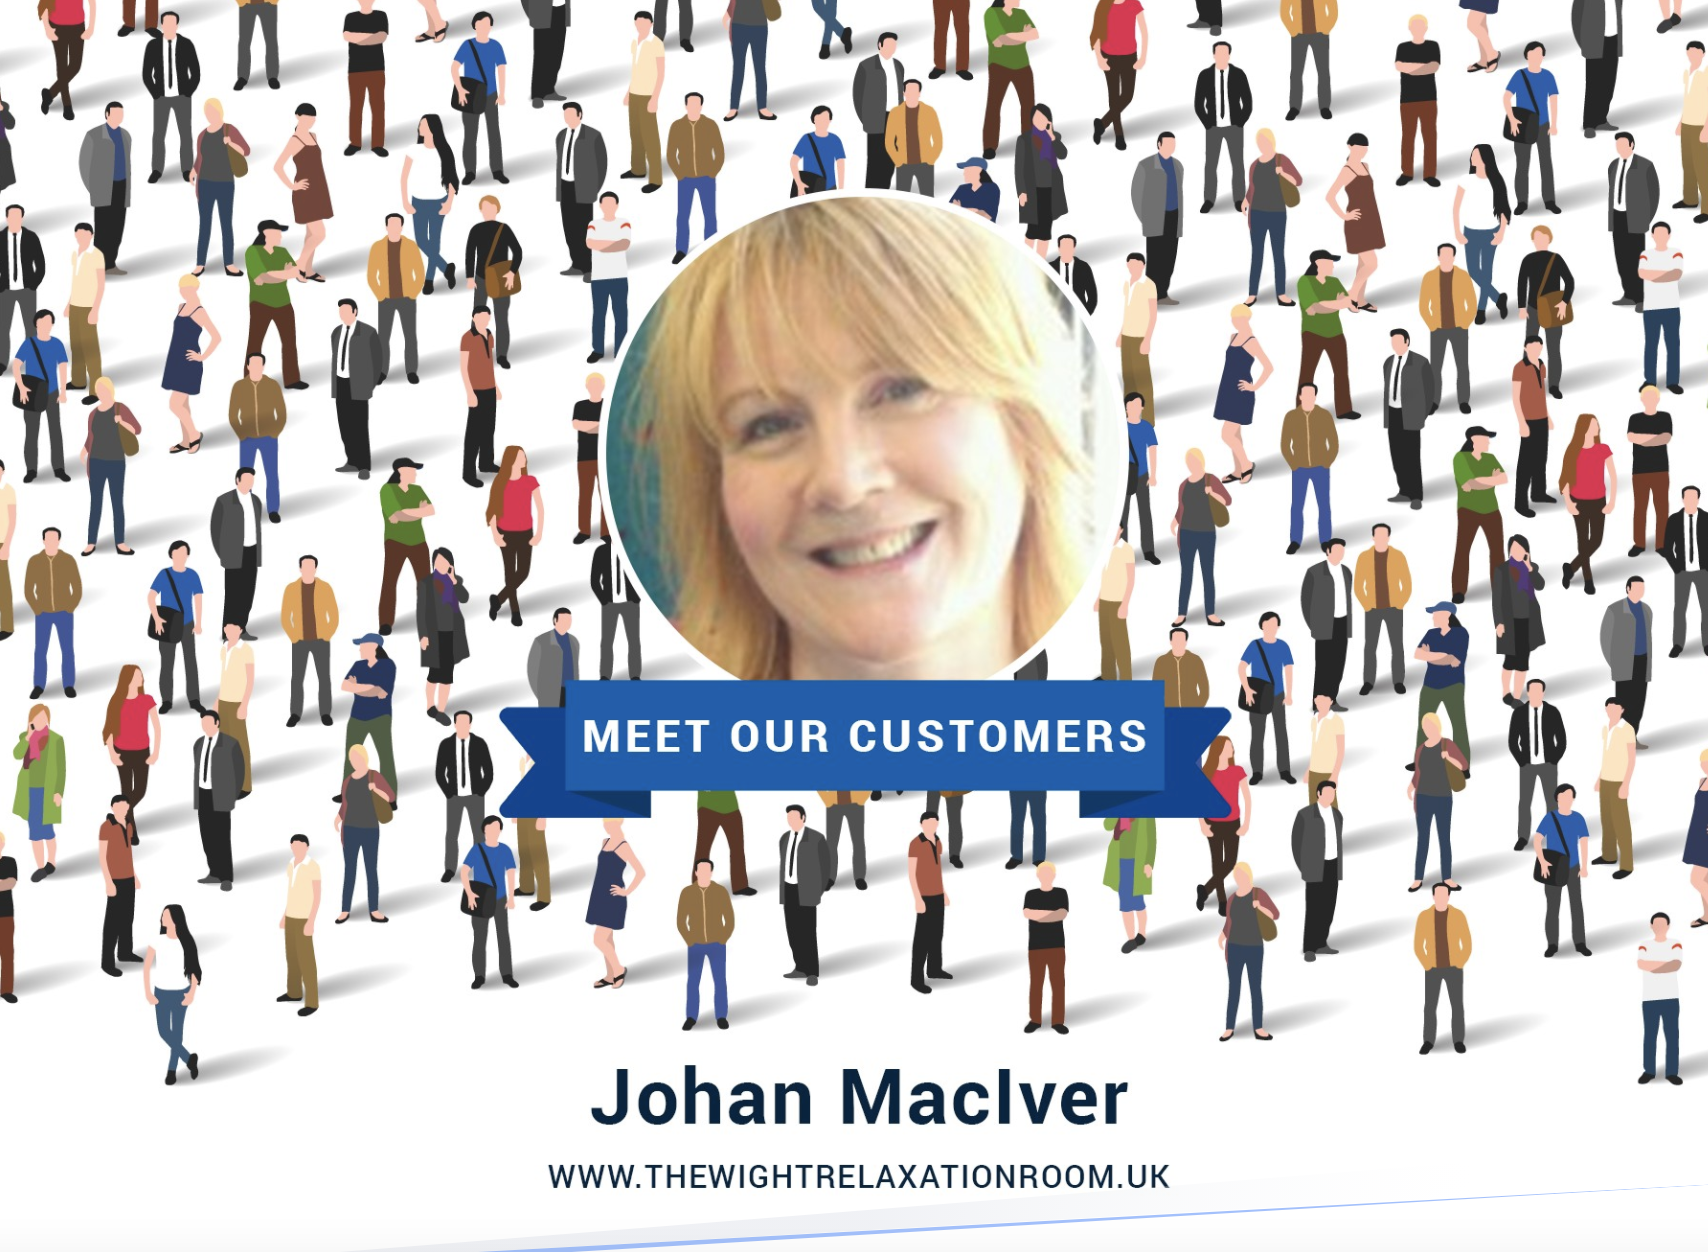 Meet Our Customers - Johan MacIver